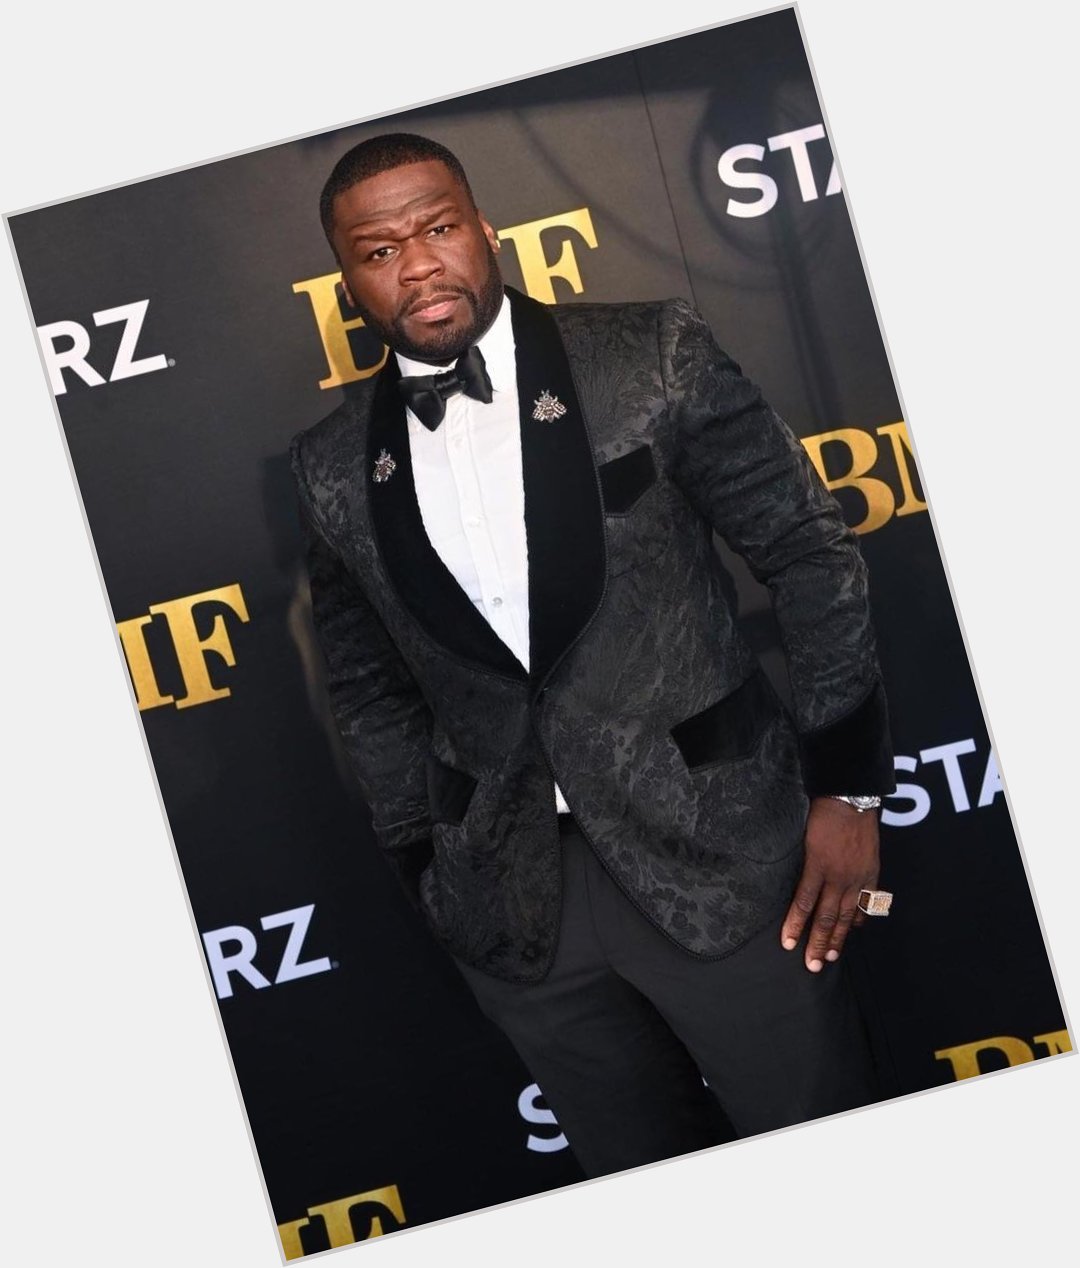 Happy 47th birthday to 50 Cent 